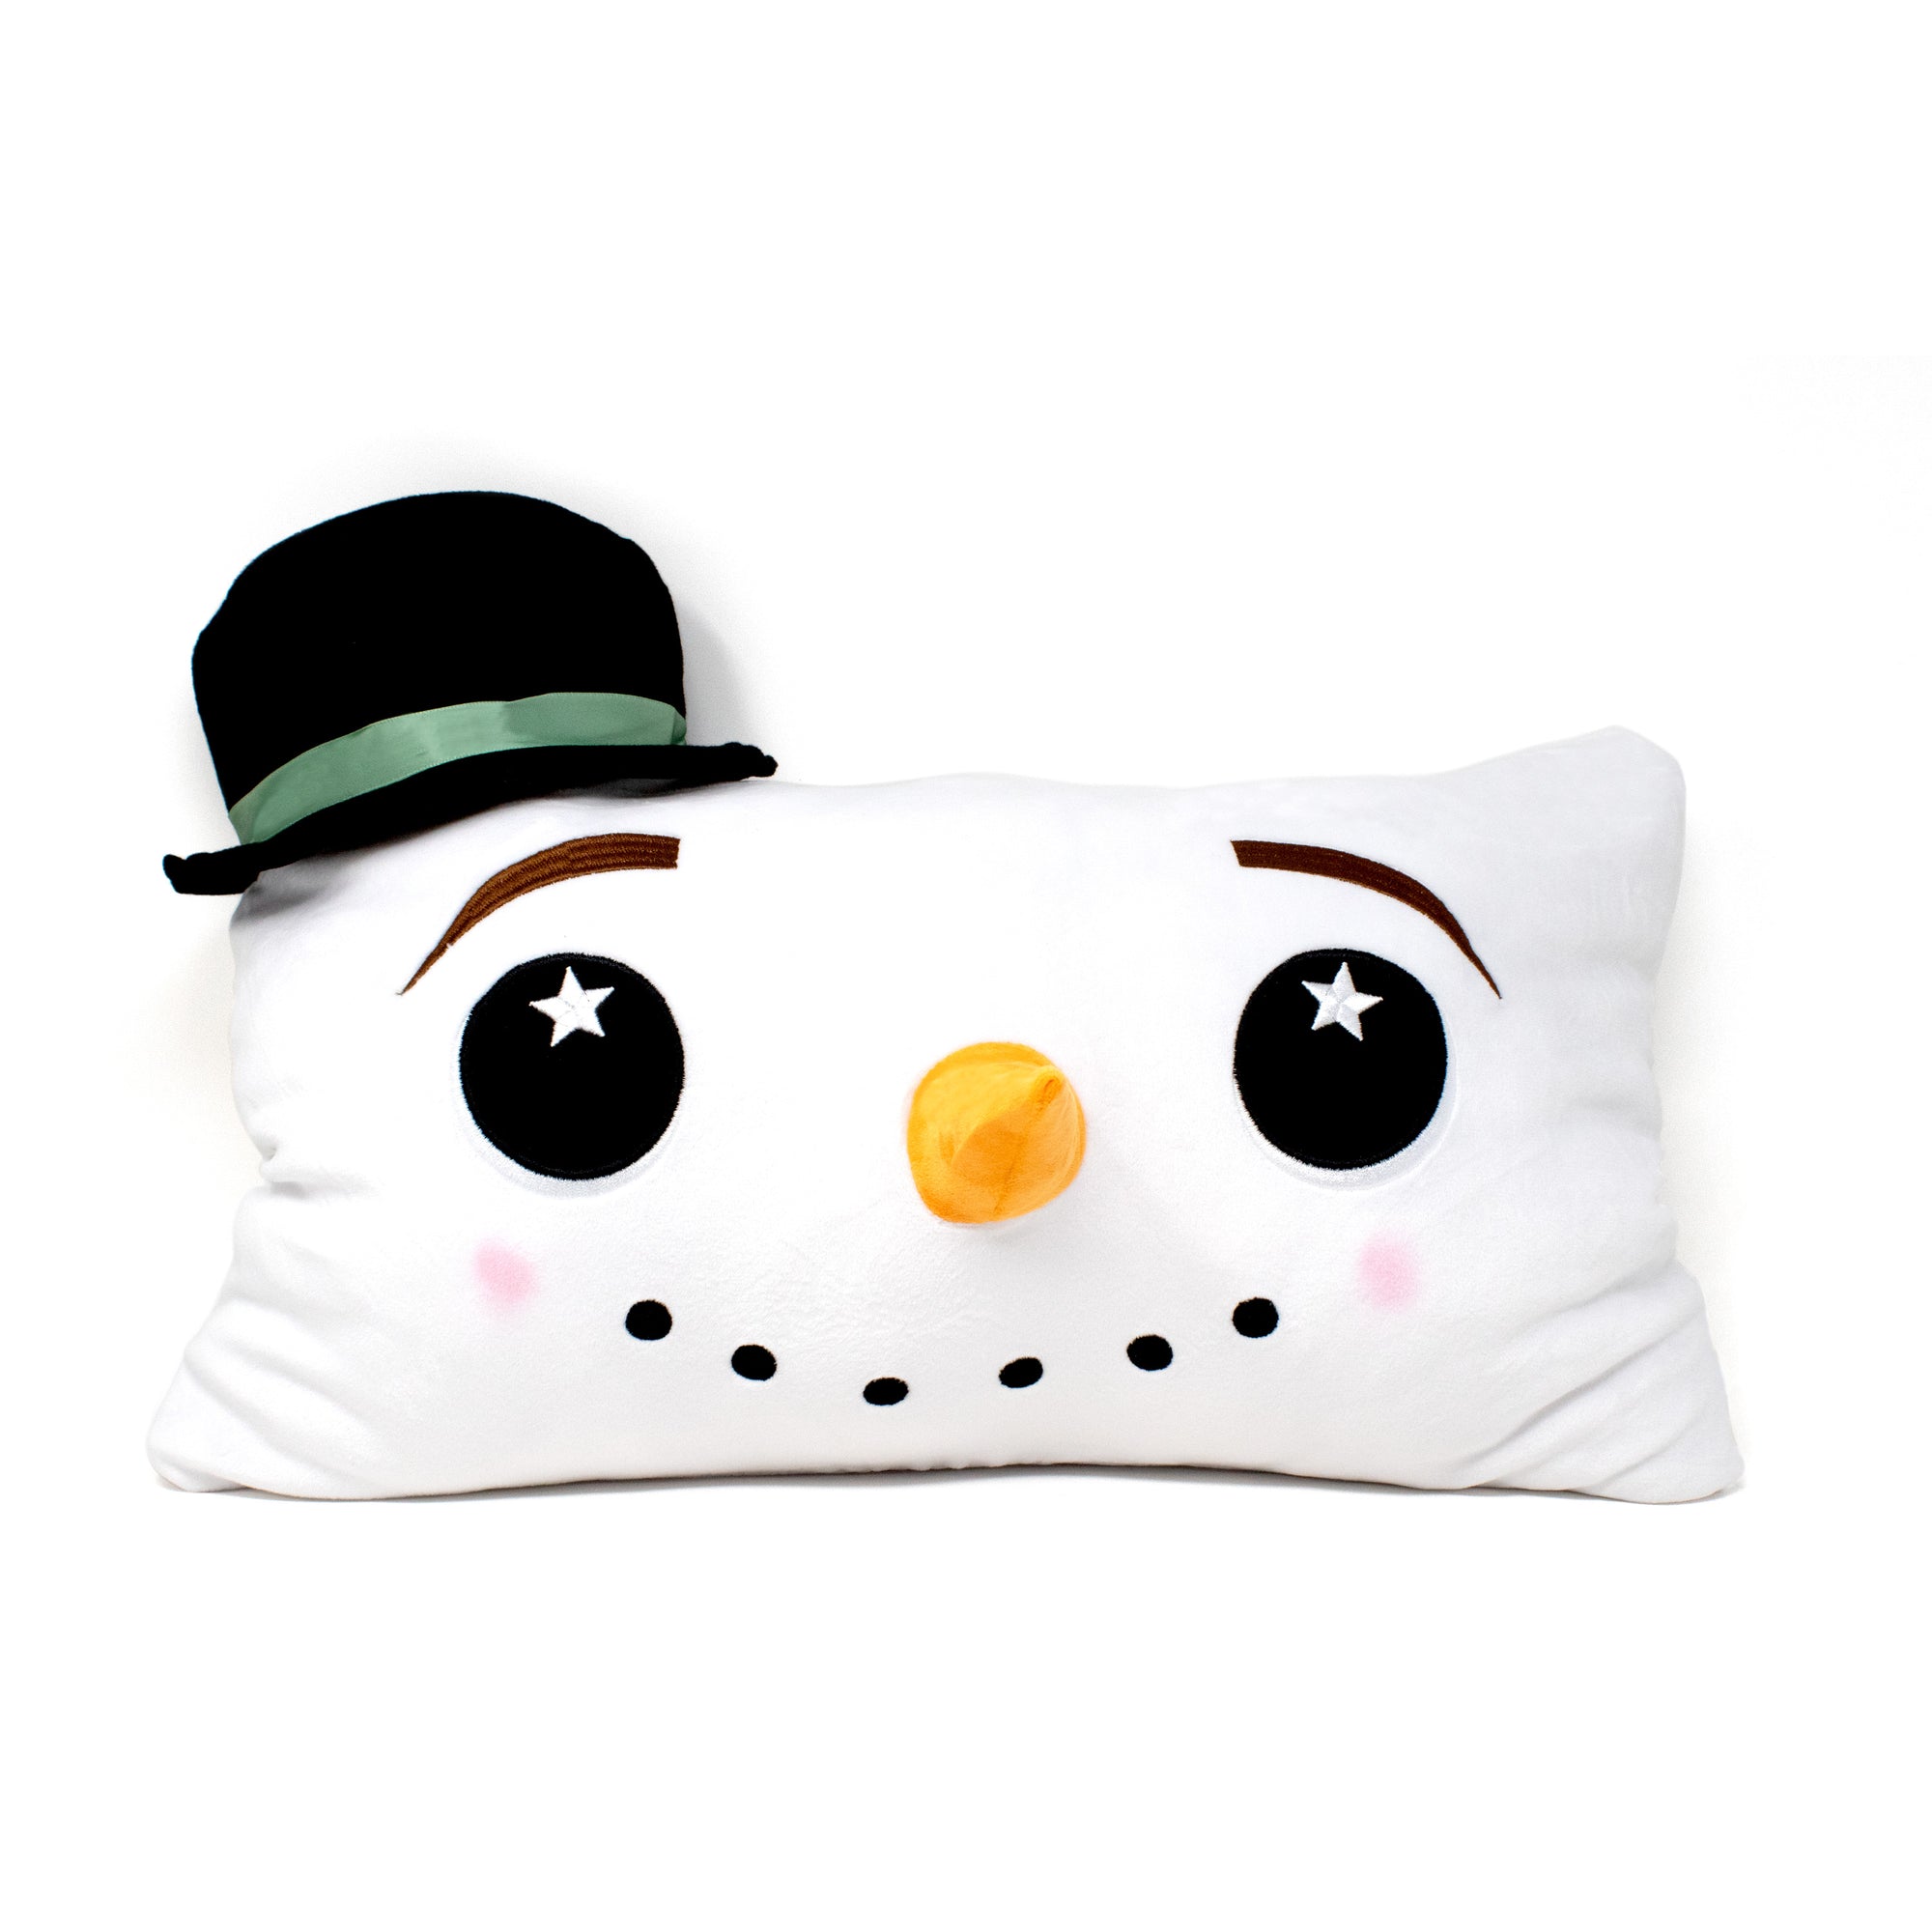 Jack the Snowman Pillow